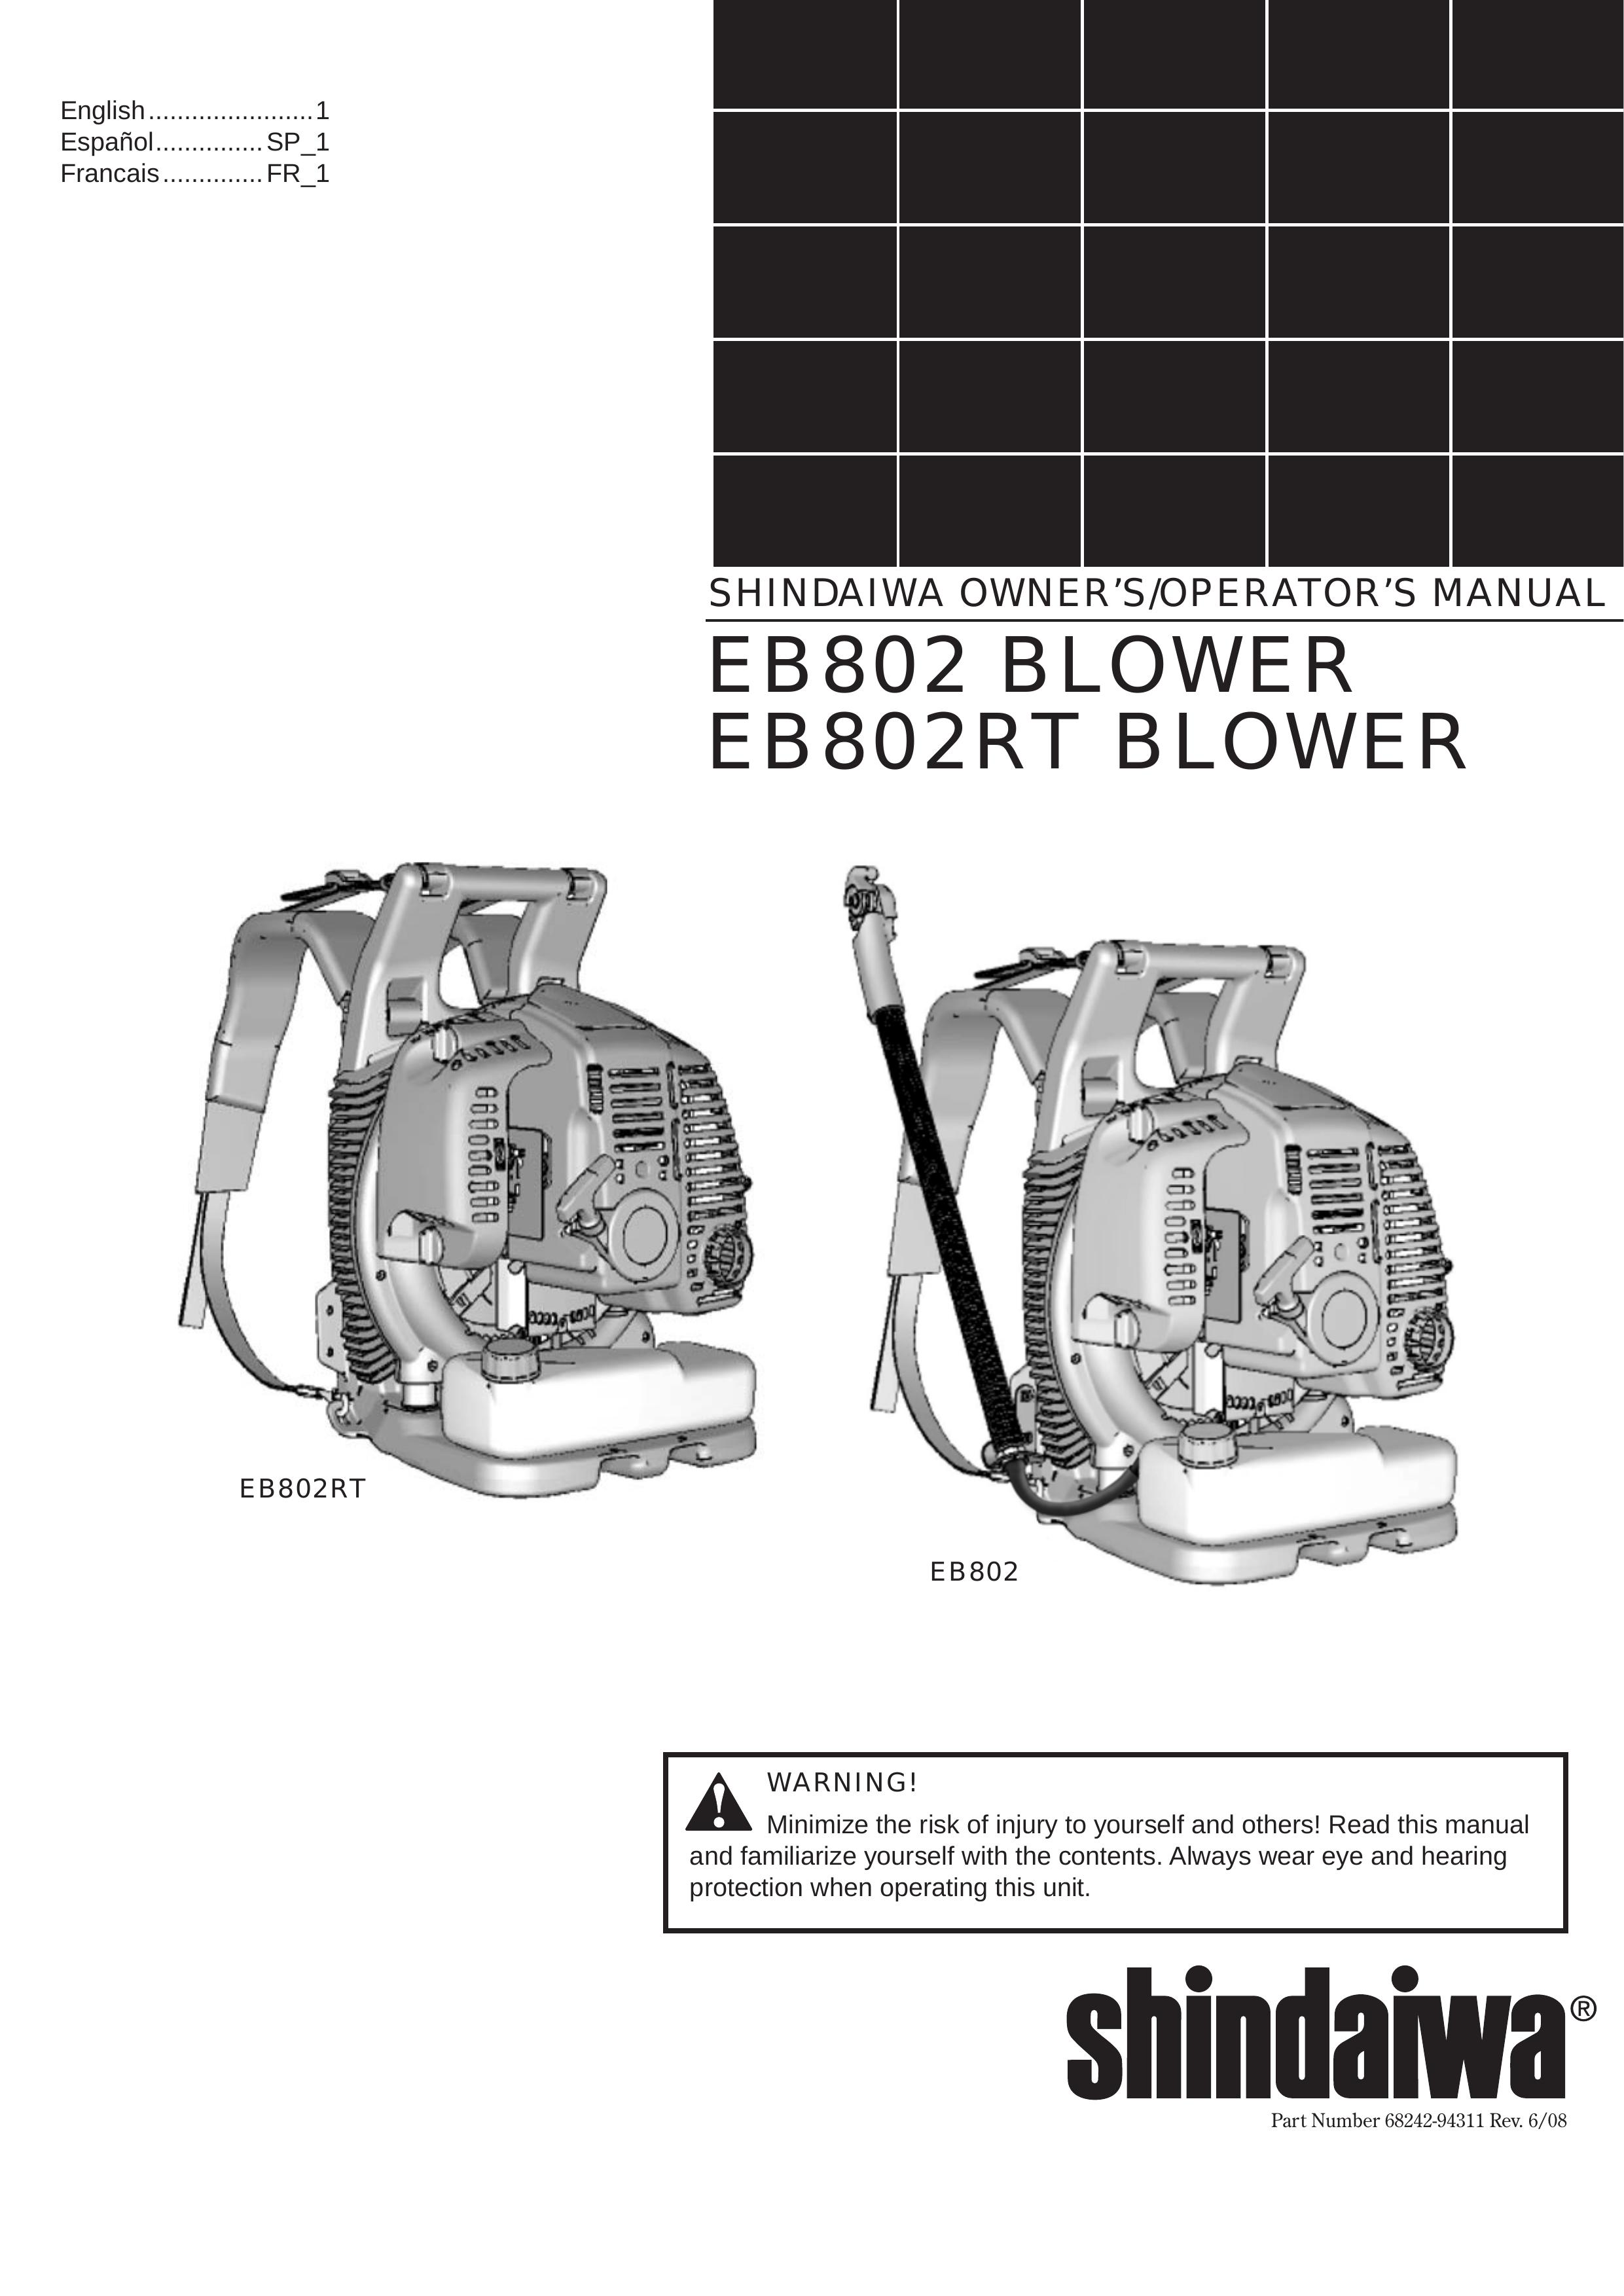 Shindaiwa EB802RT Blower User Manual